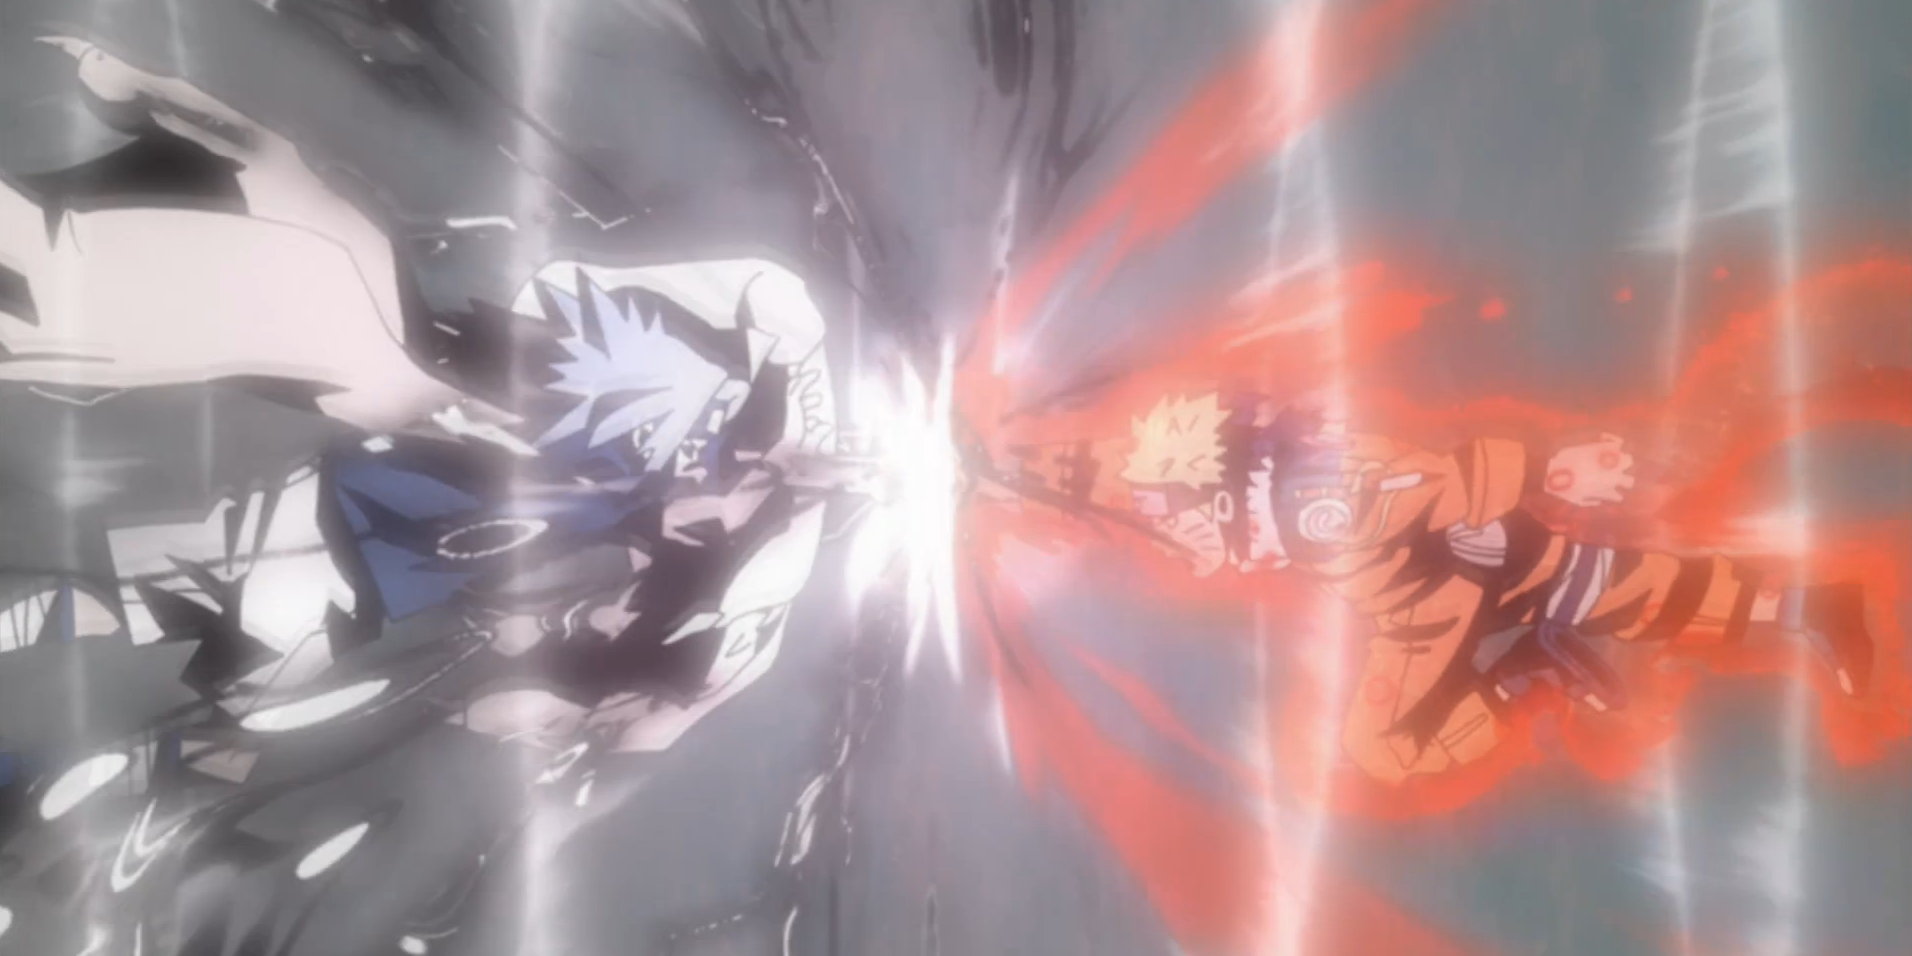 A transformed Sasuke and Naruto's Chidori and Rasengan clashing in front of a waterfall in Naruto.